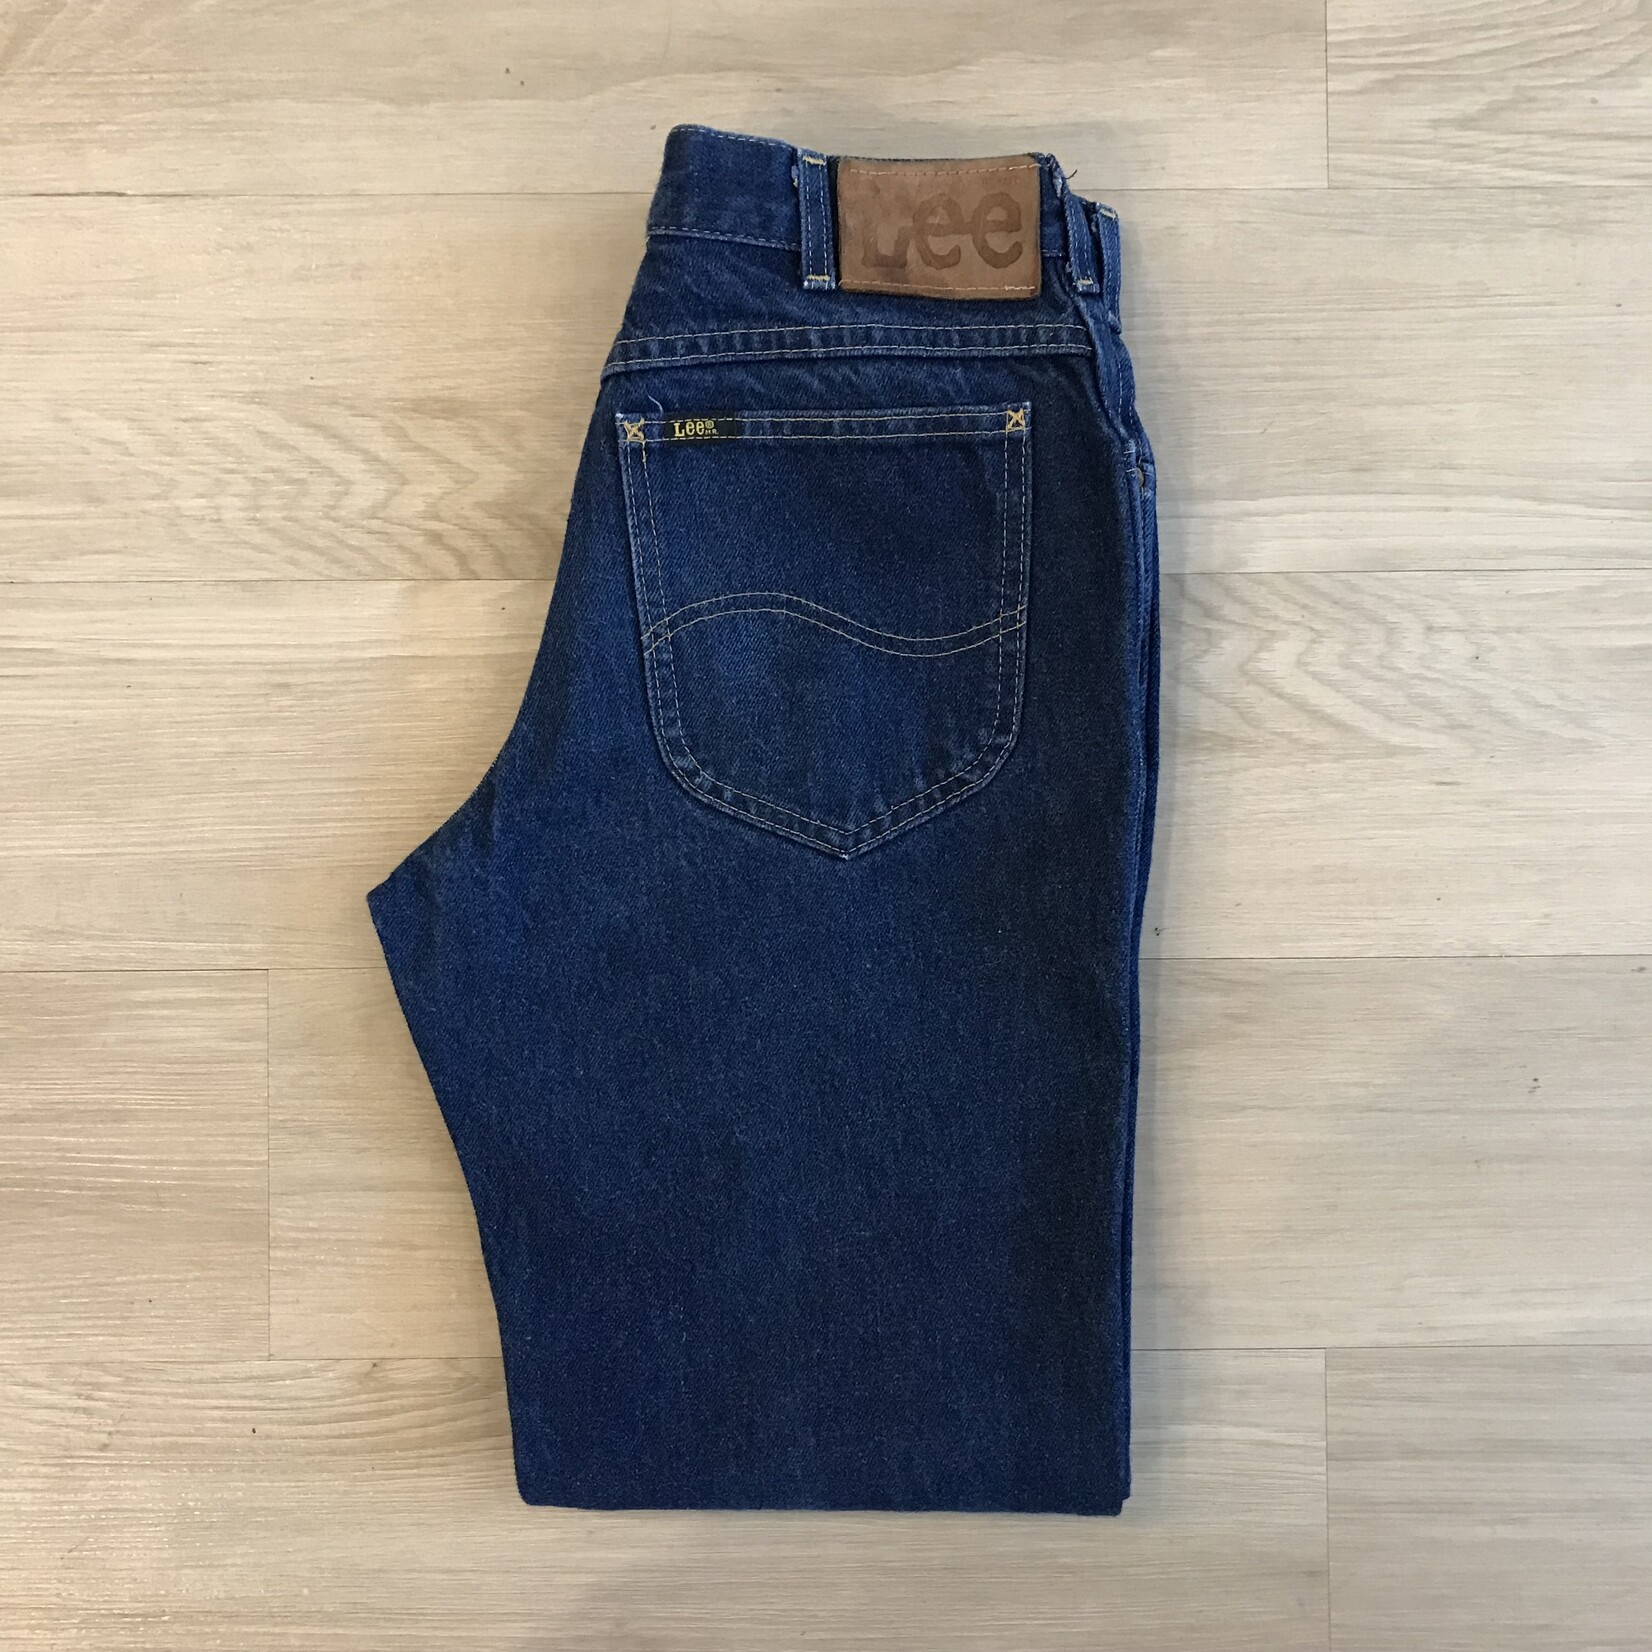 13382	lee jeans sz. 31 x 30